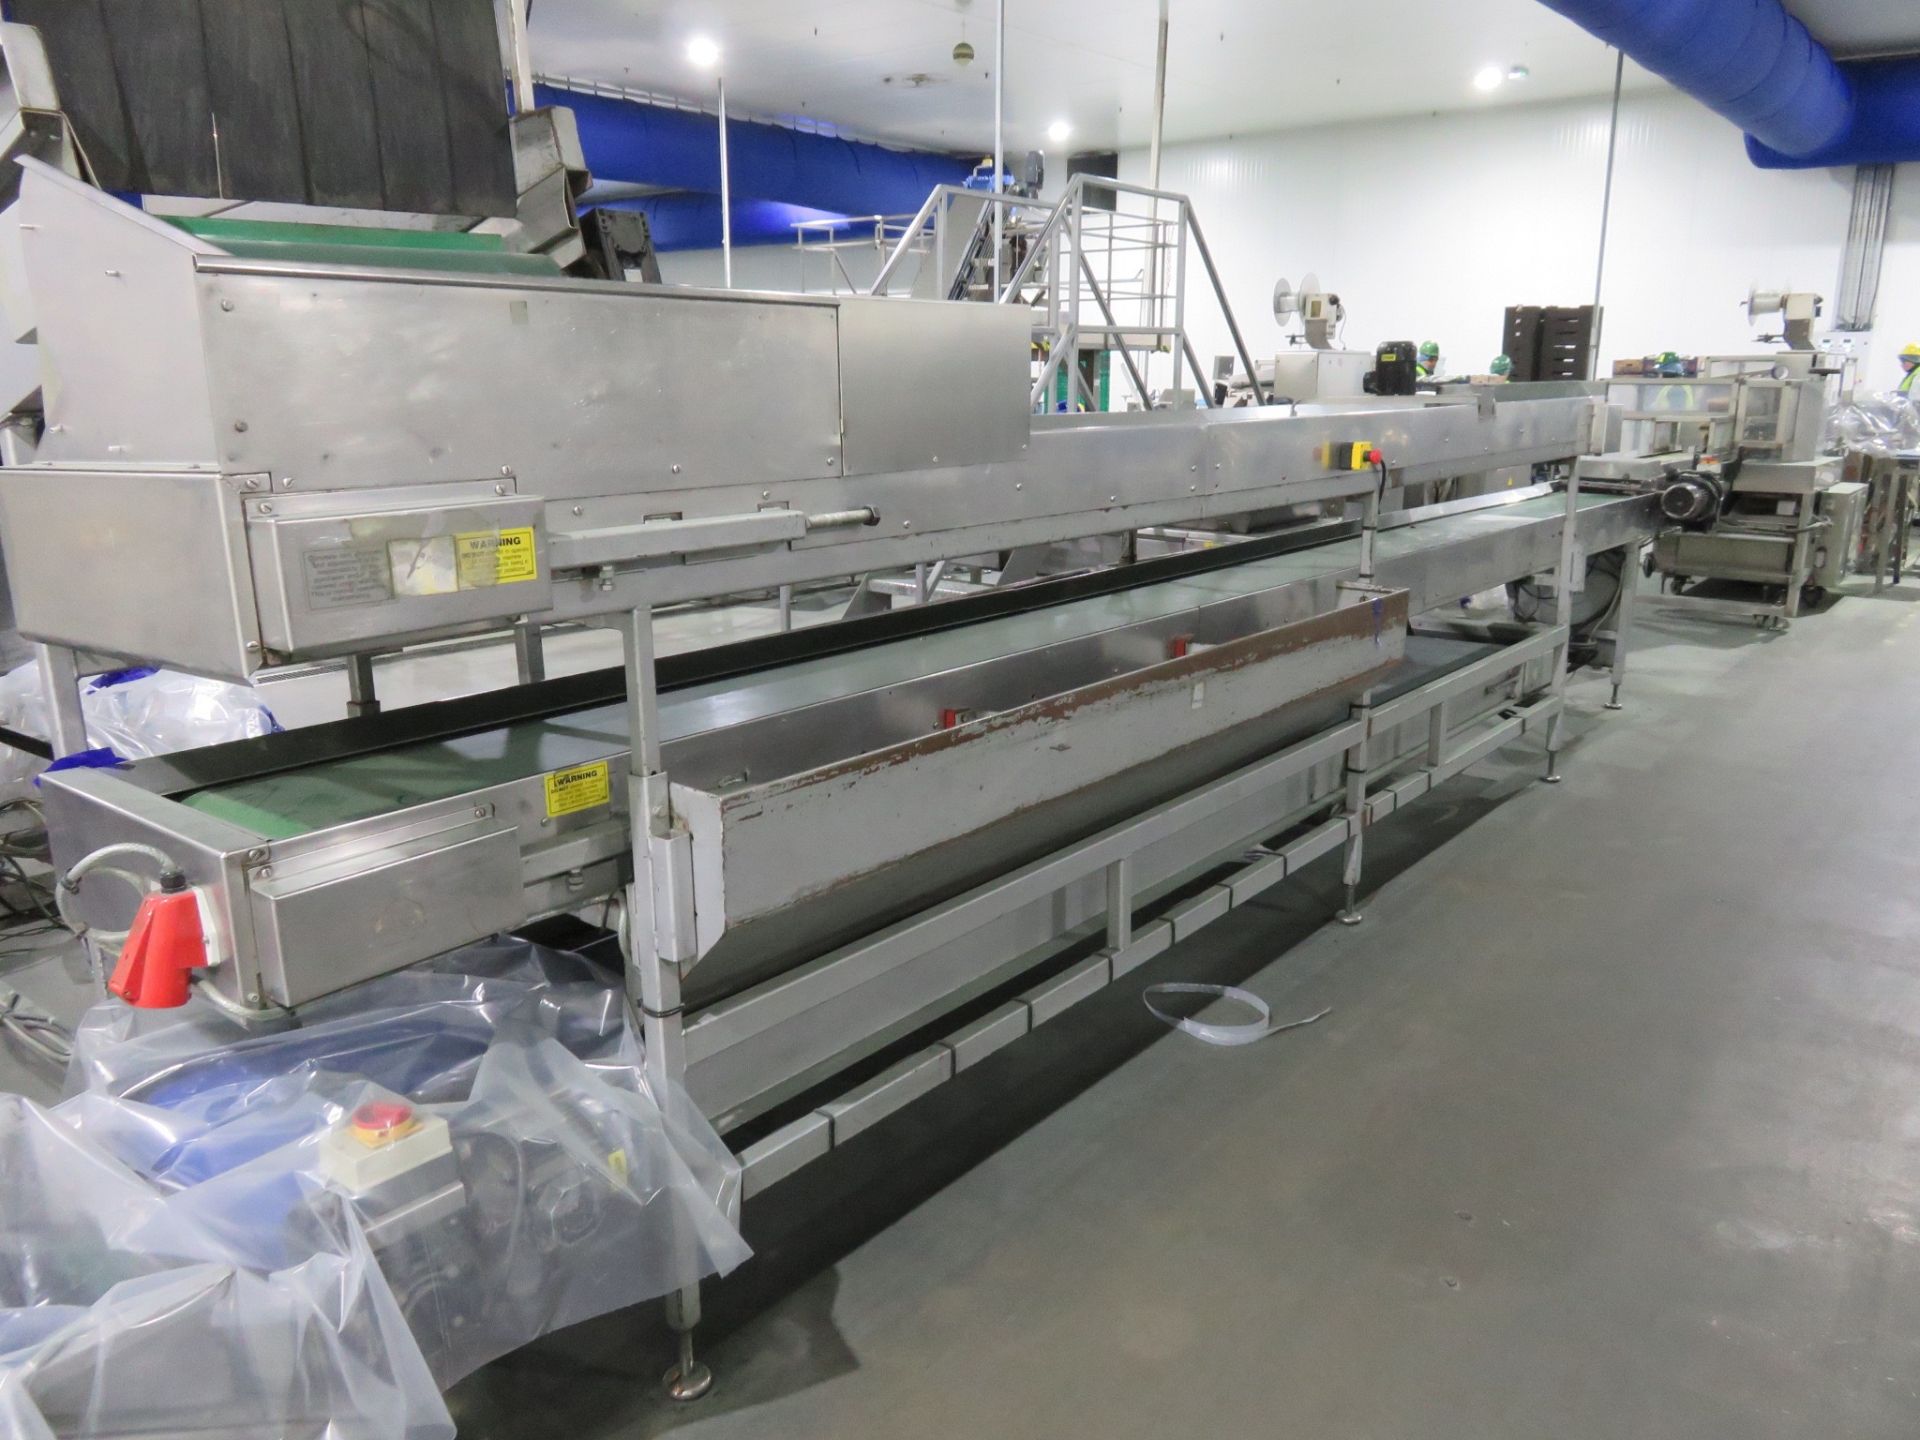 3 Tier sorting conveyor, top & bottom tier 4 mfr long, middle tier 6 mfr long with PEC flow control